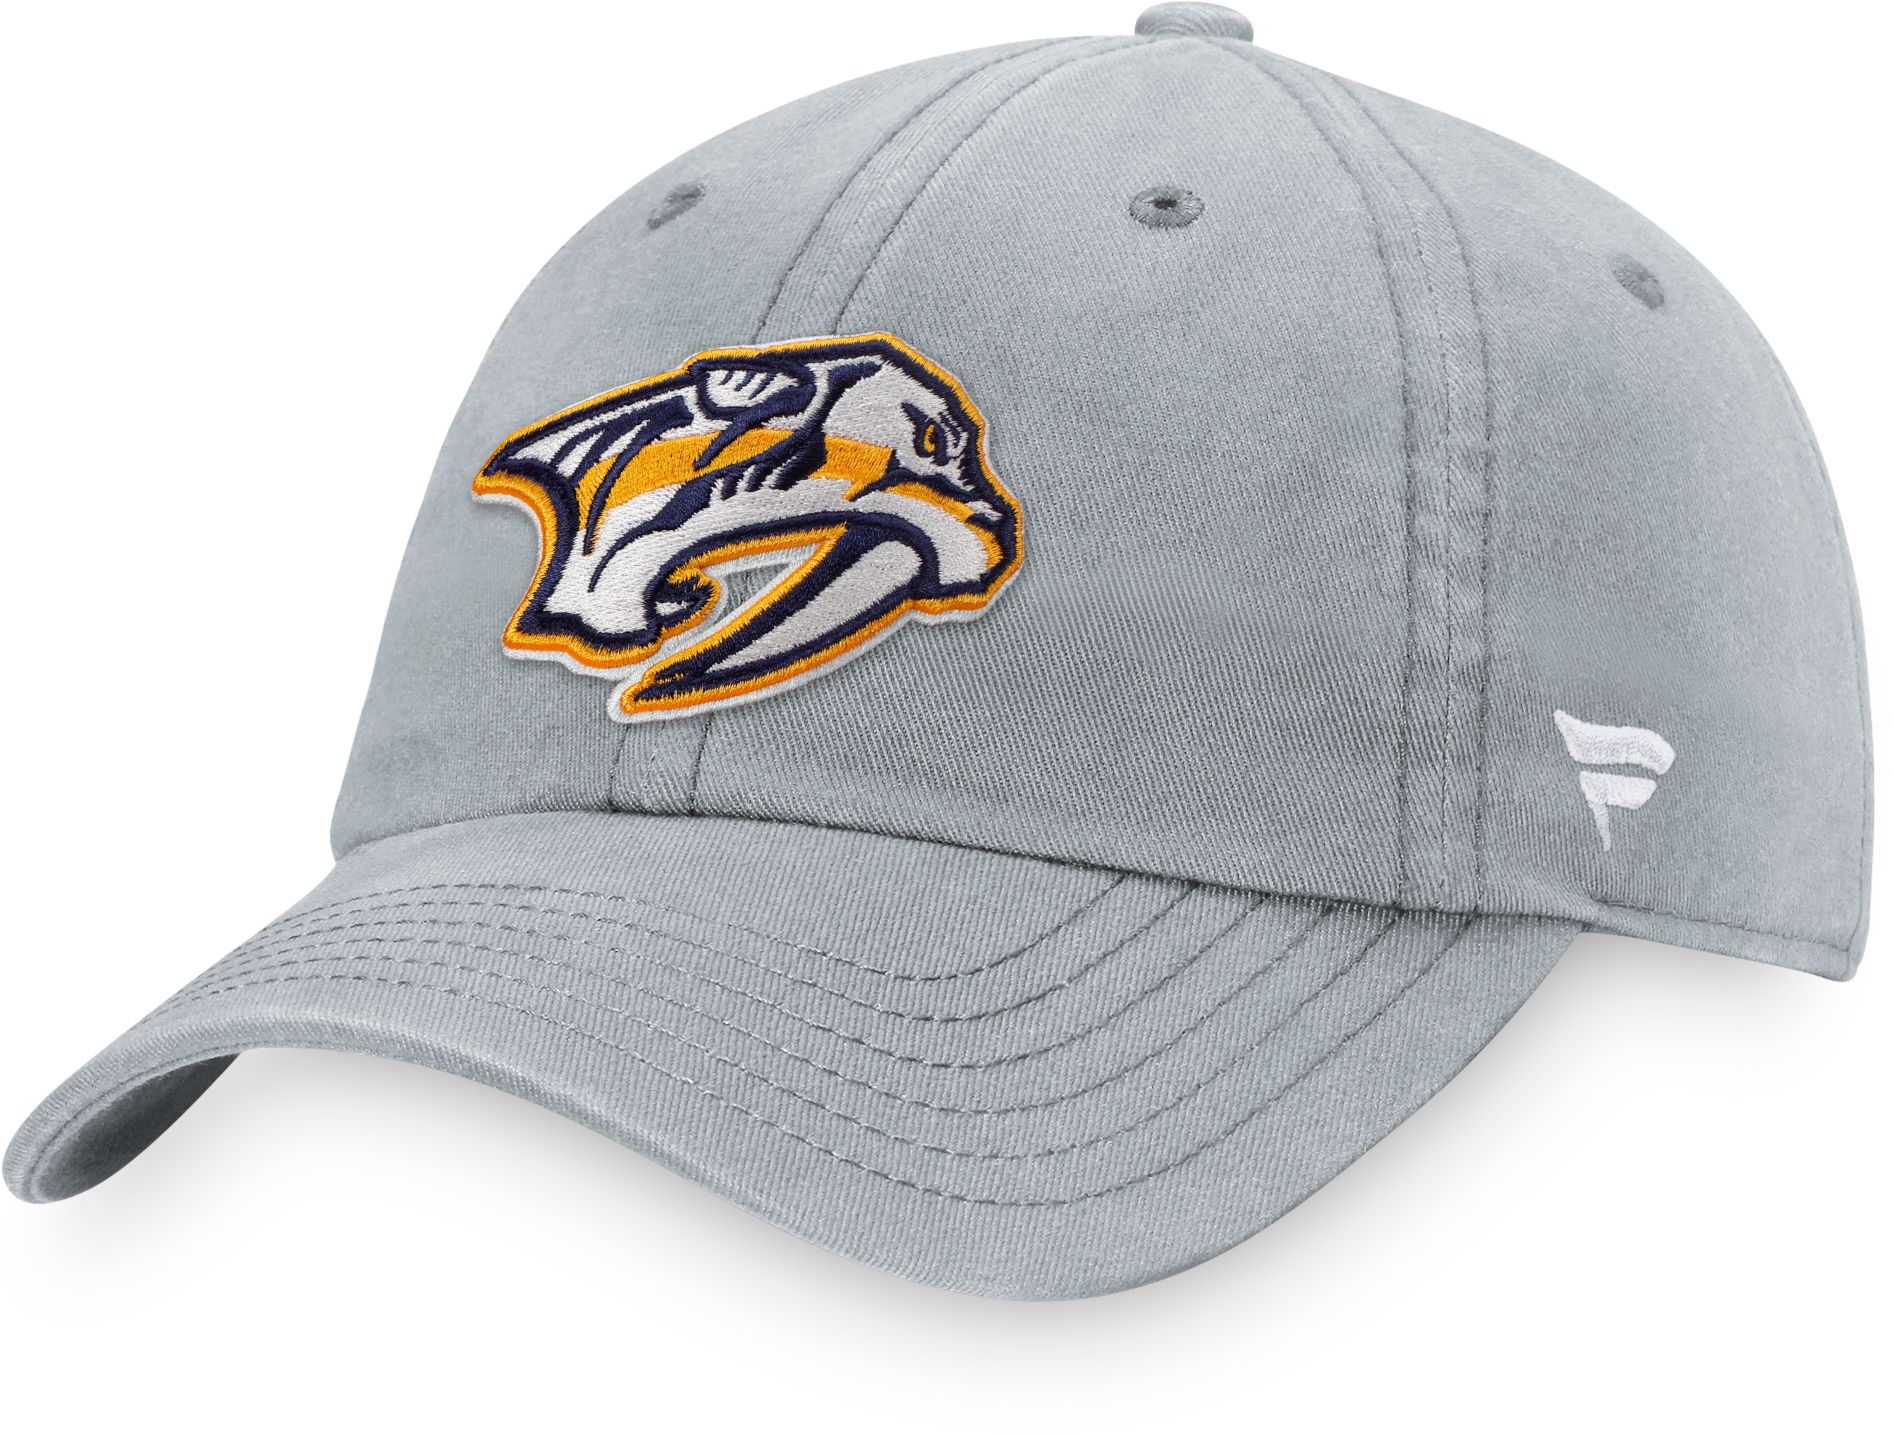 NHL Nashville Predators Block Party Adjustable Hat